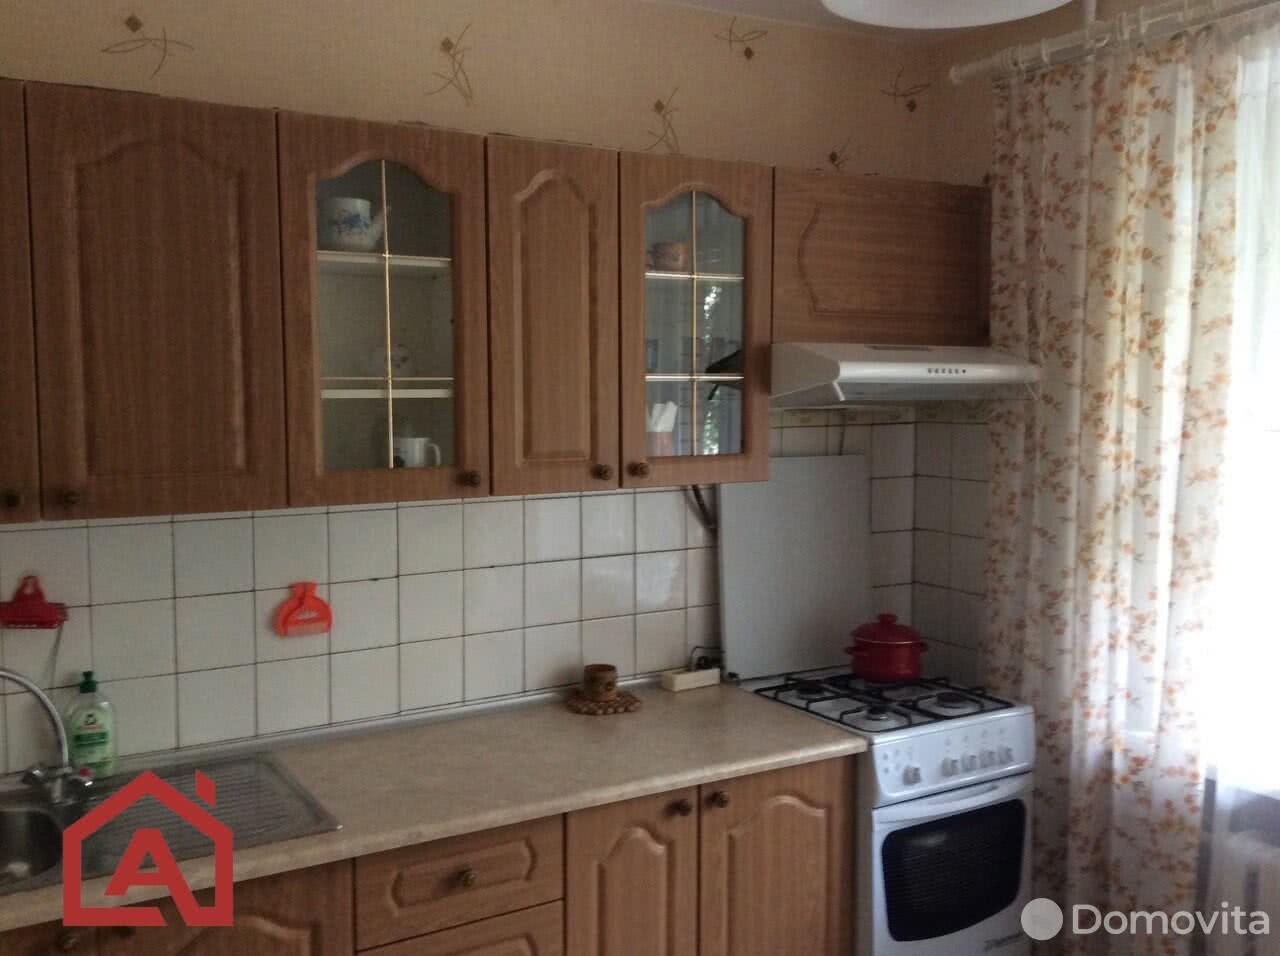 квартира, Минск, ул. Пулихова, д. 23, стоимость аренды 1 027 р./мес.